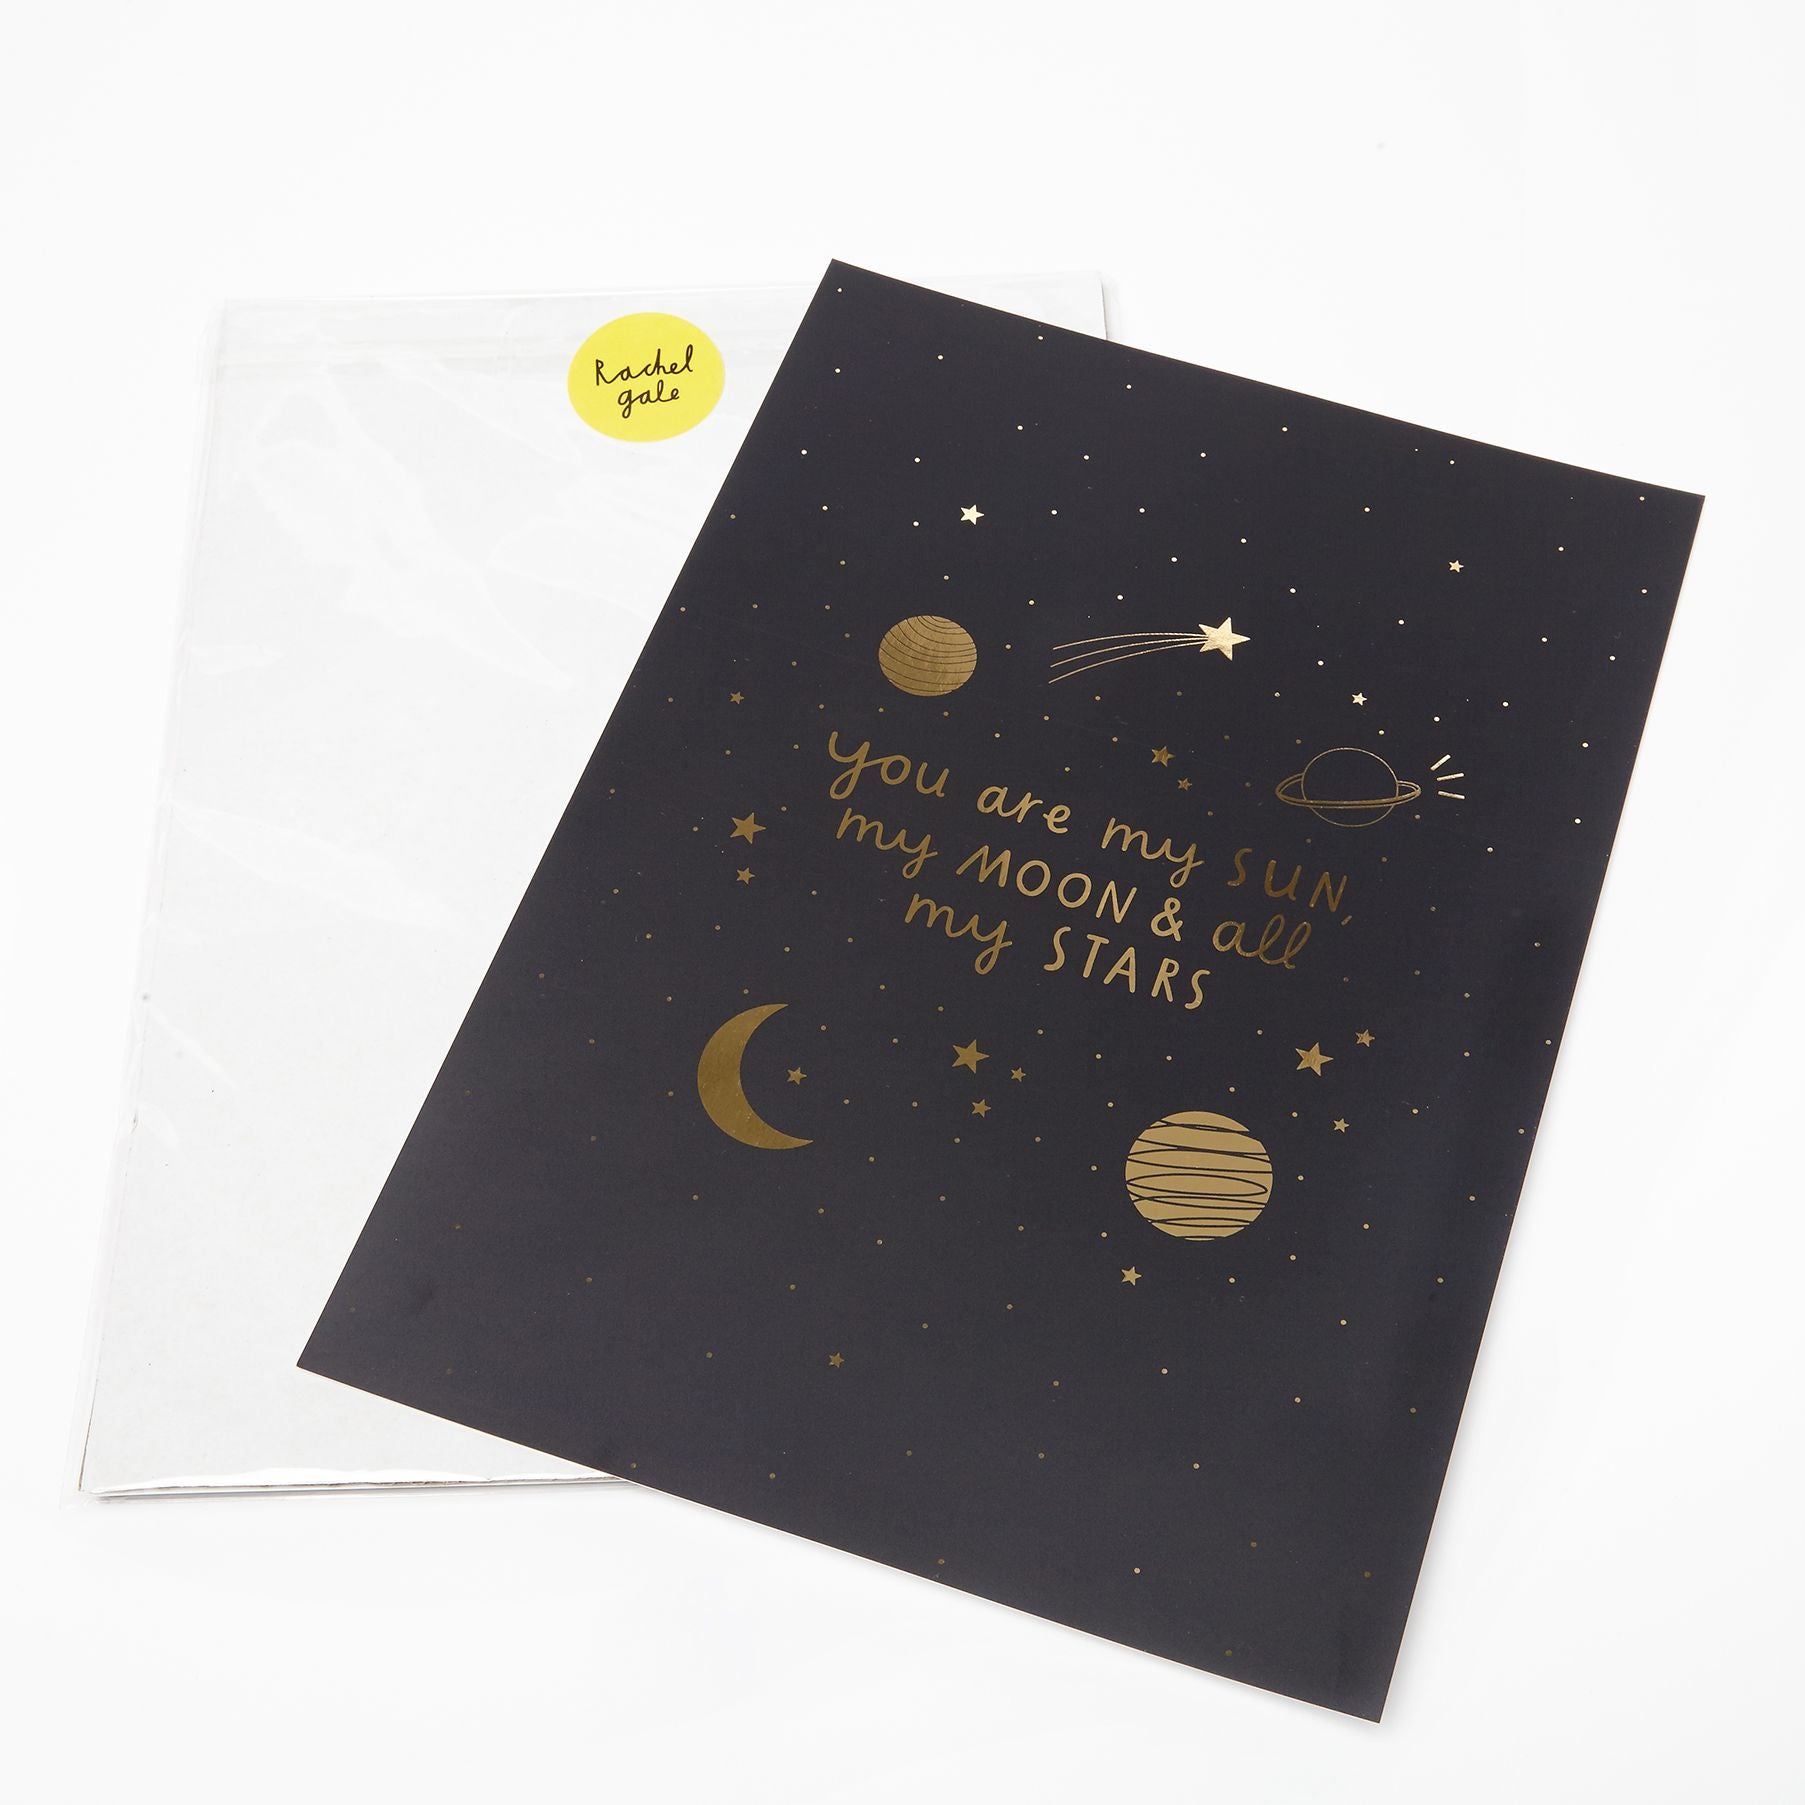 Sun, Moon and Stars Navy & gold foil detail - A4 Art Print